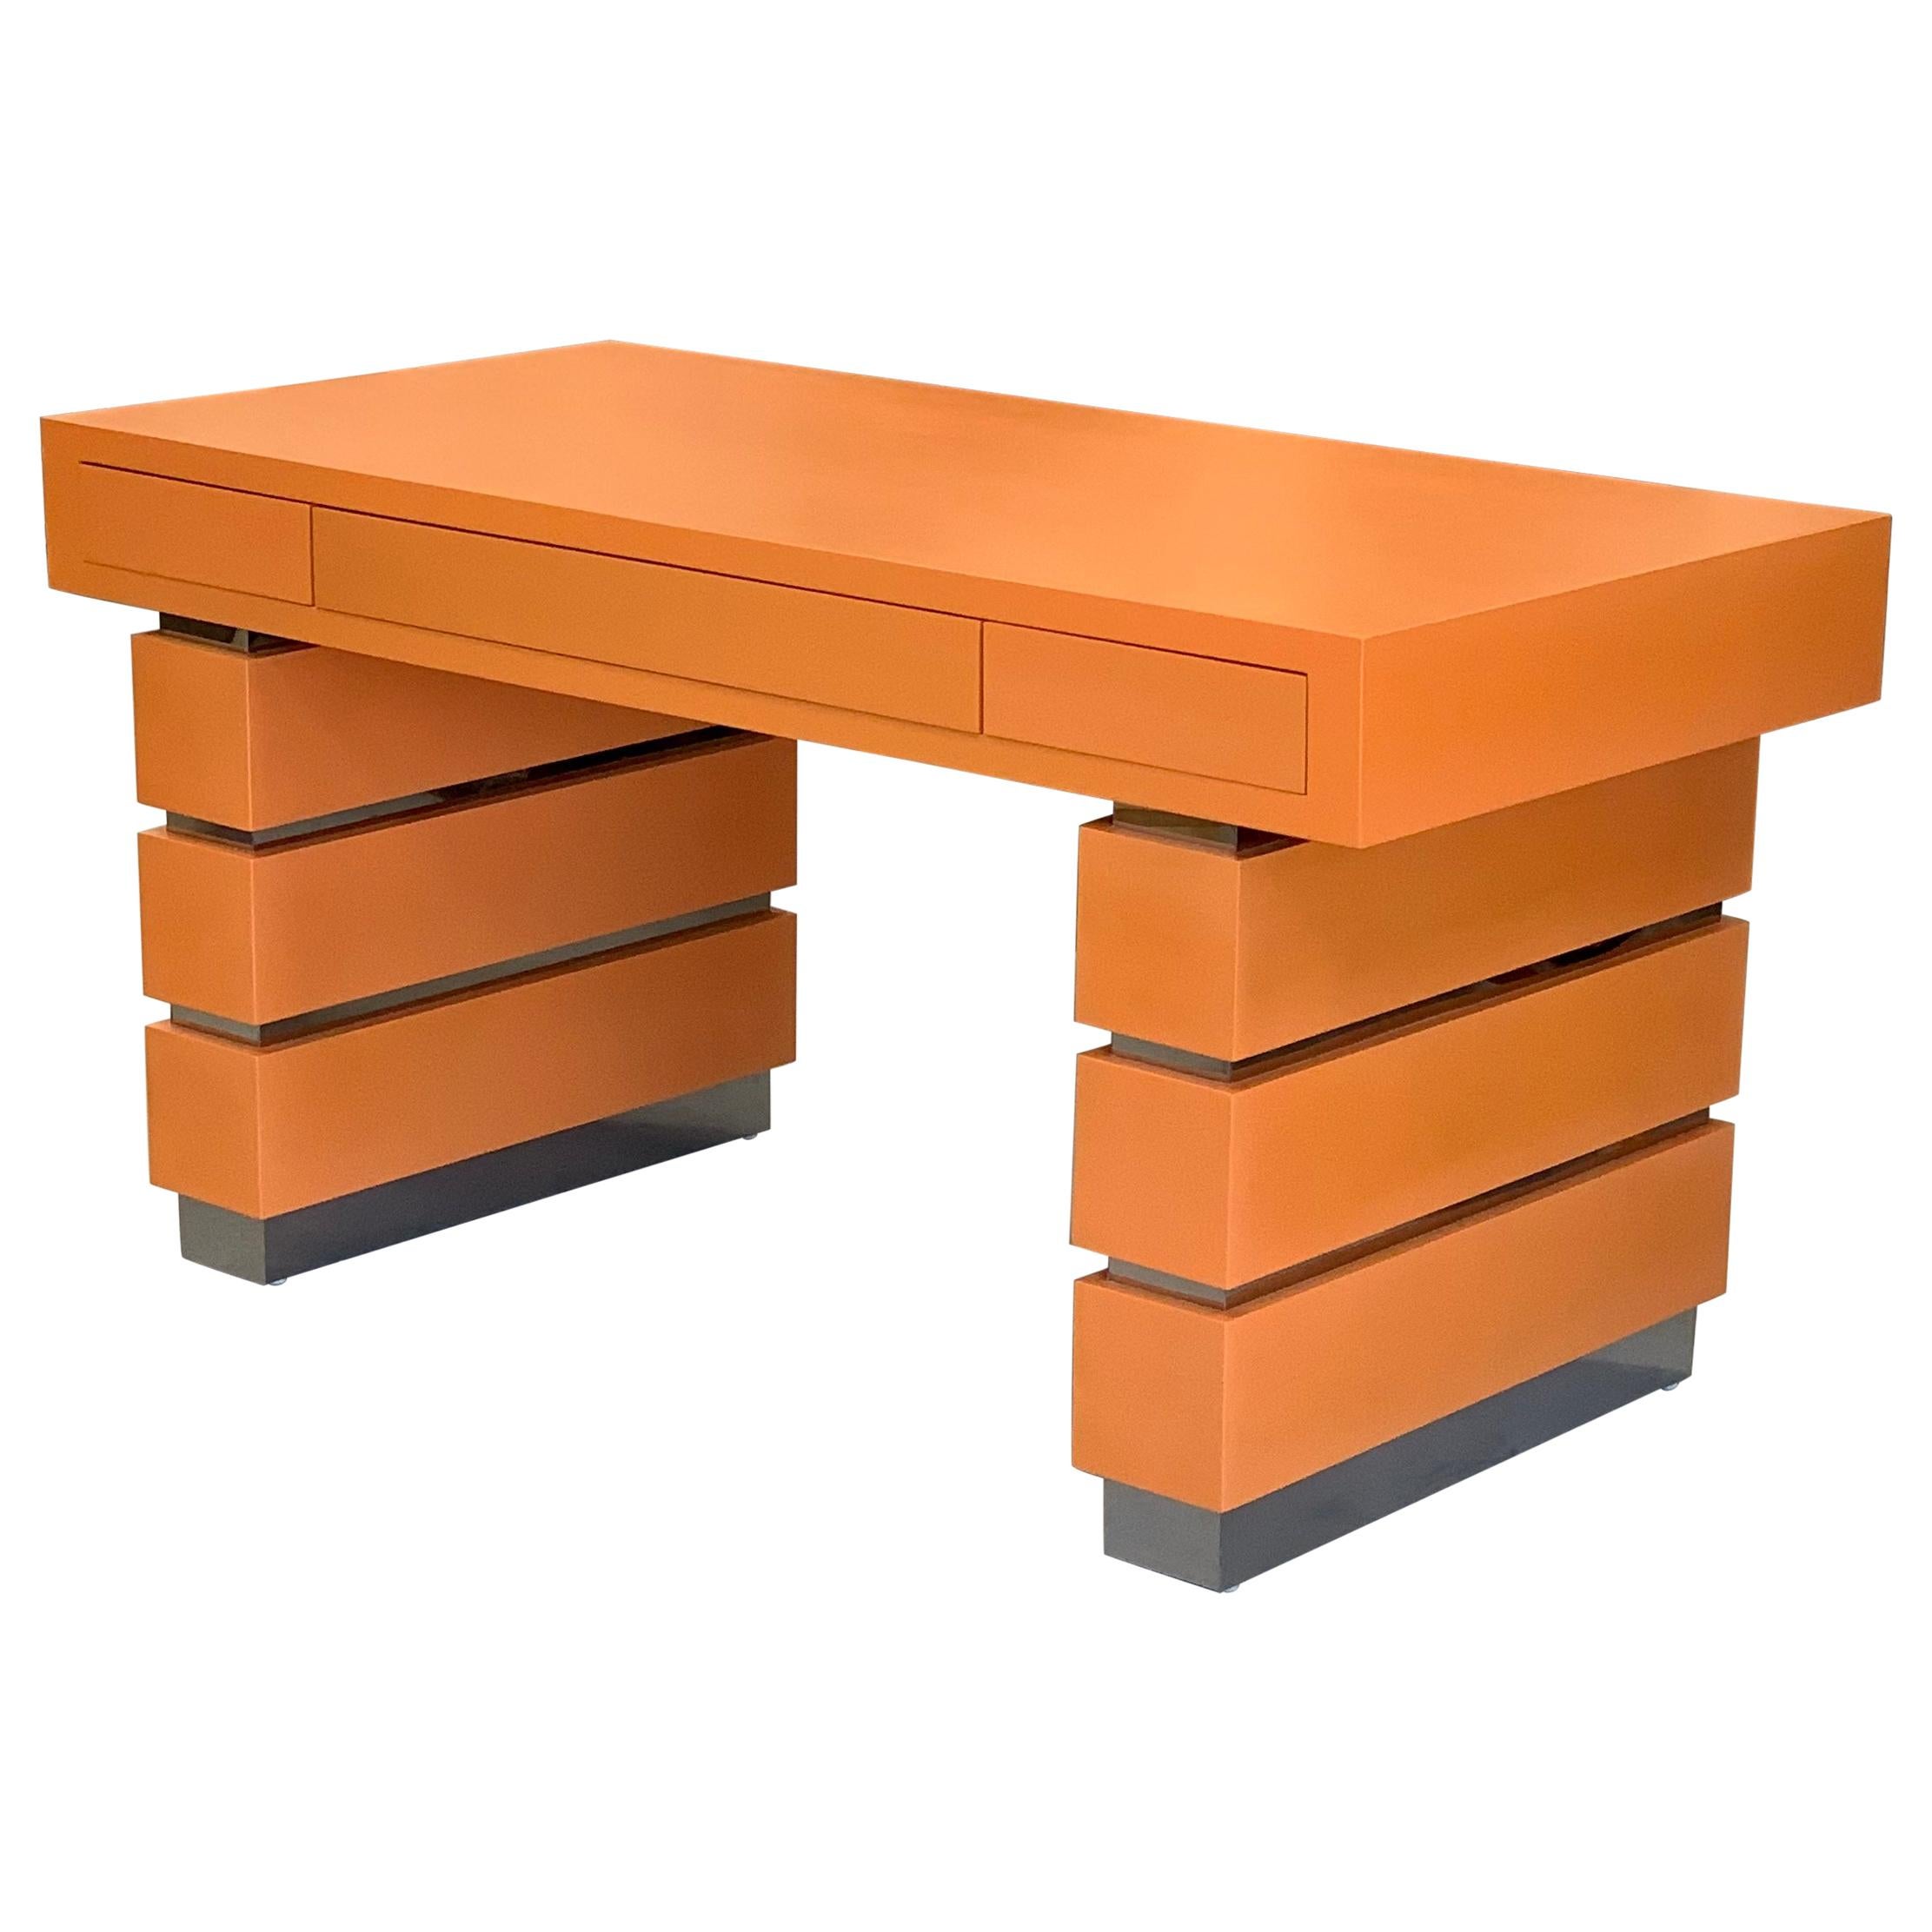 Bridges over Time Originals Custom Orange Desk For Sale